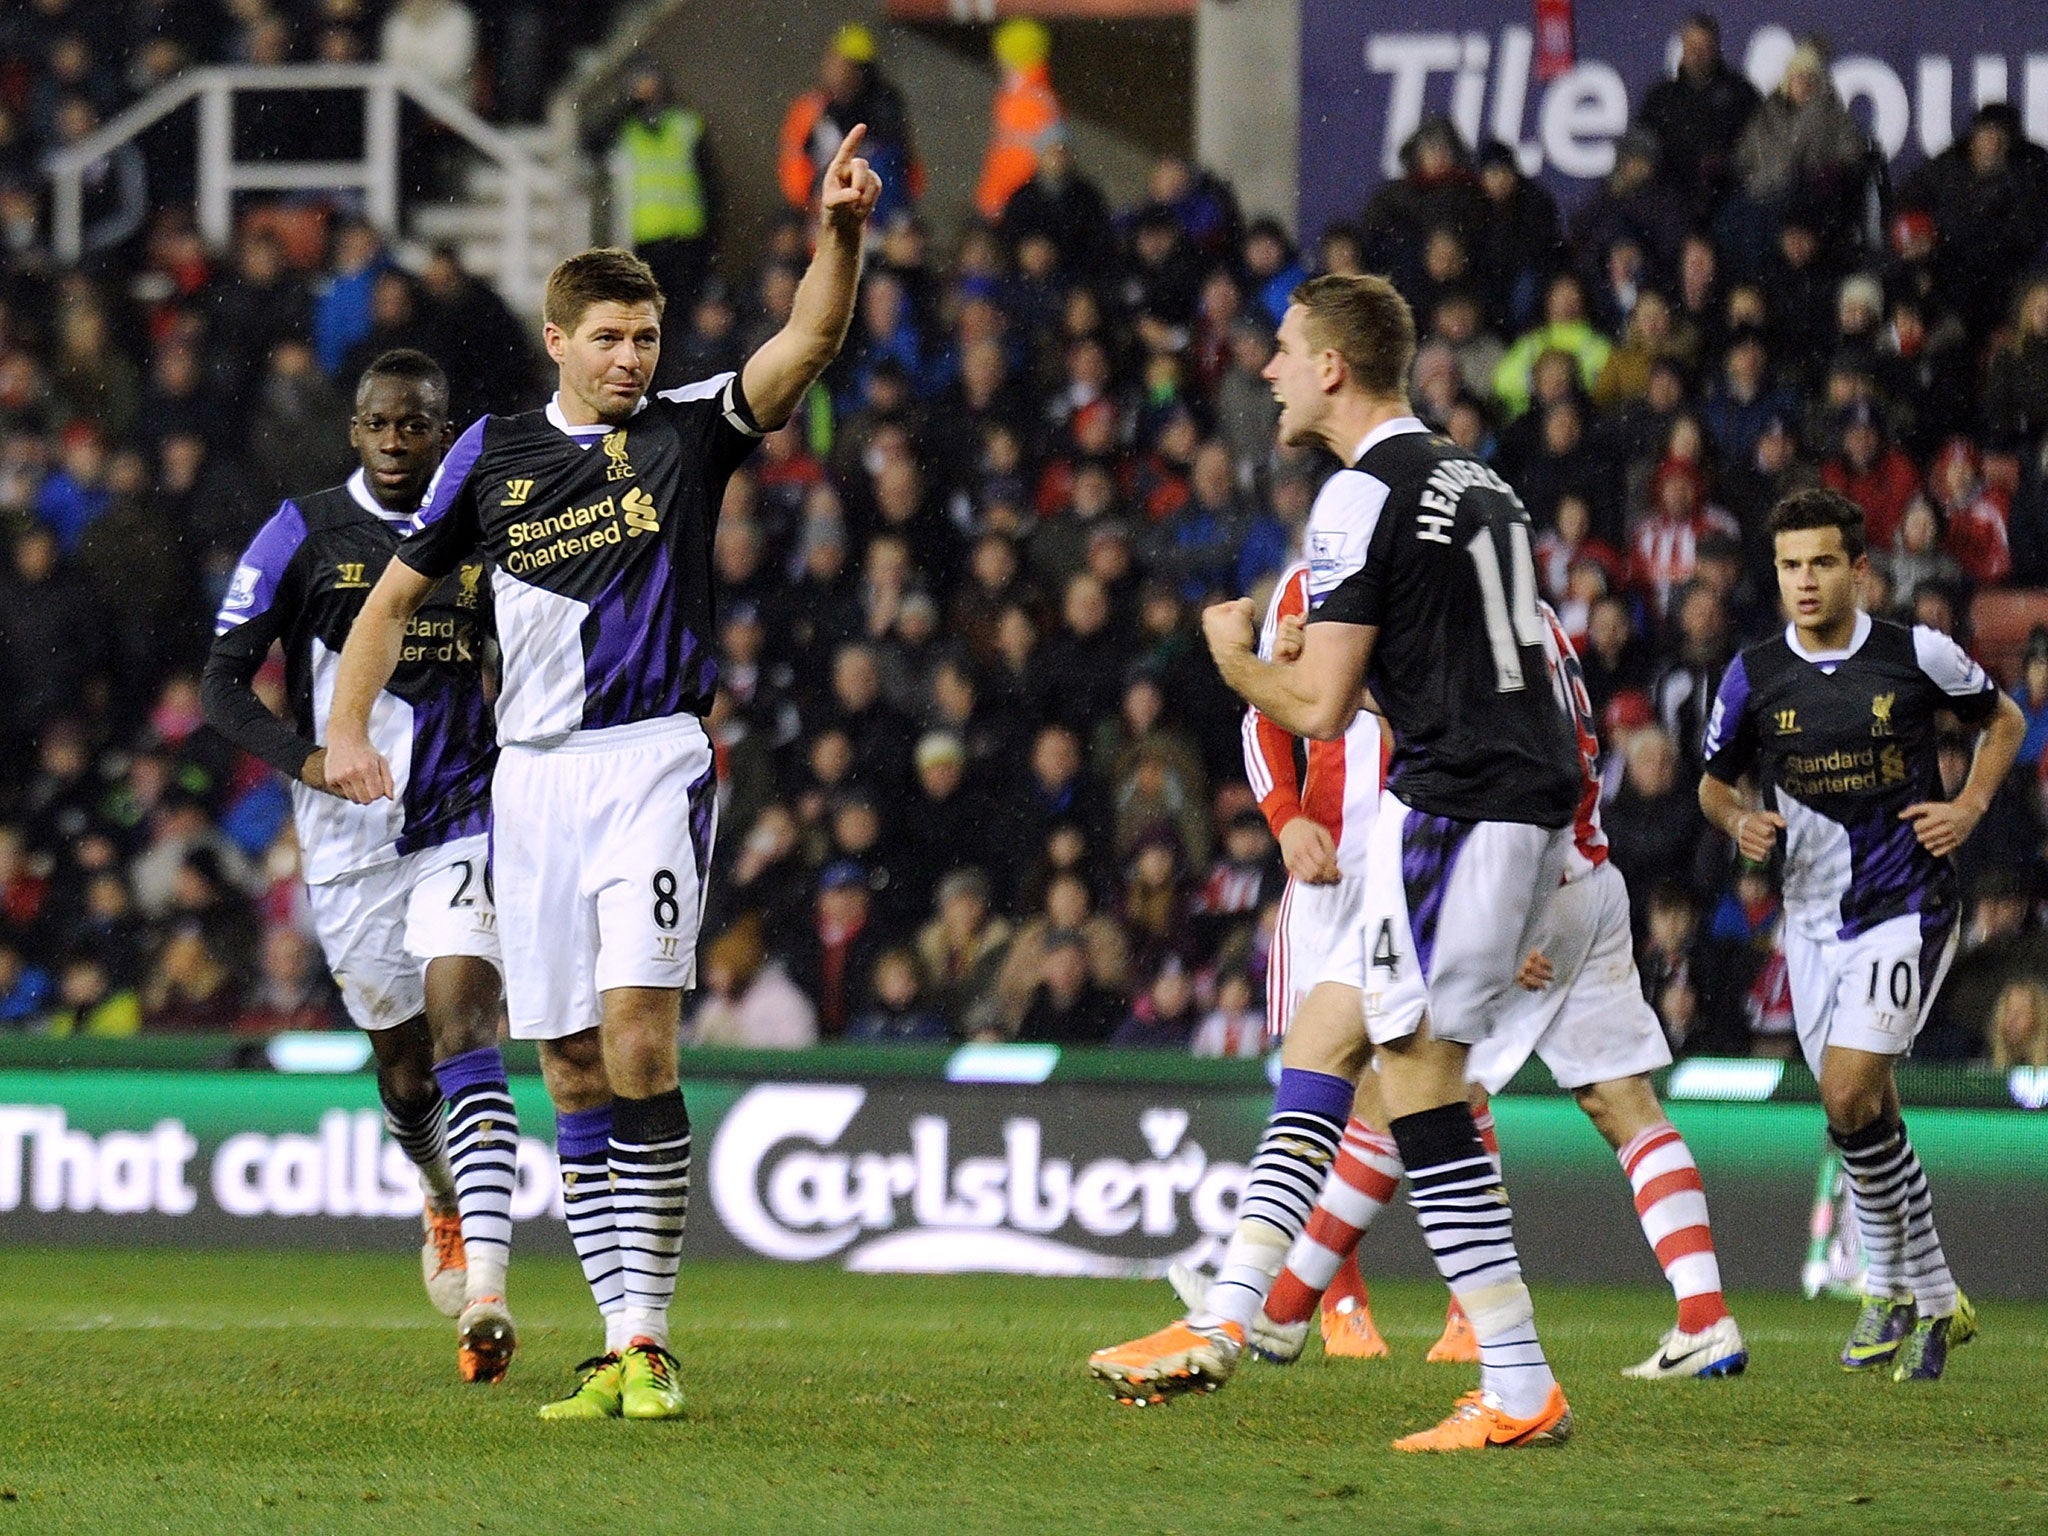 Steven Gerrard celebrates after scoring in Liverpool's 5-3 victory over Stoke